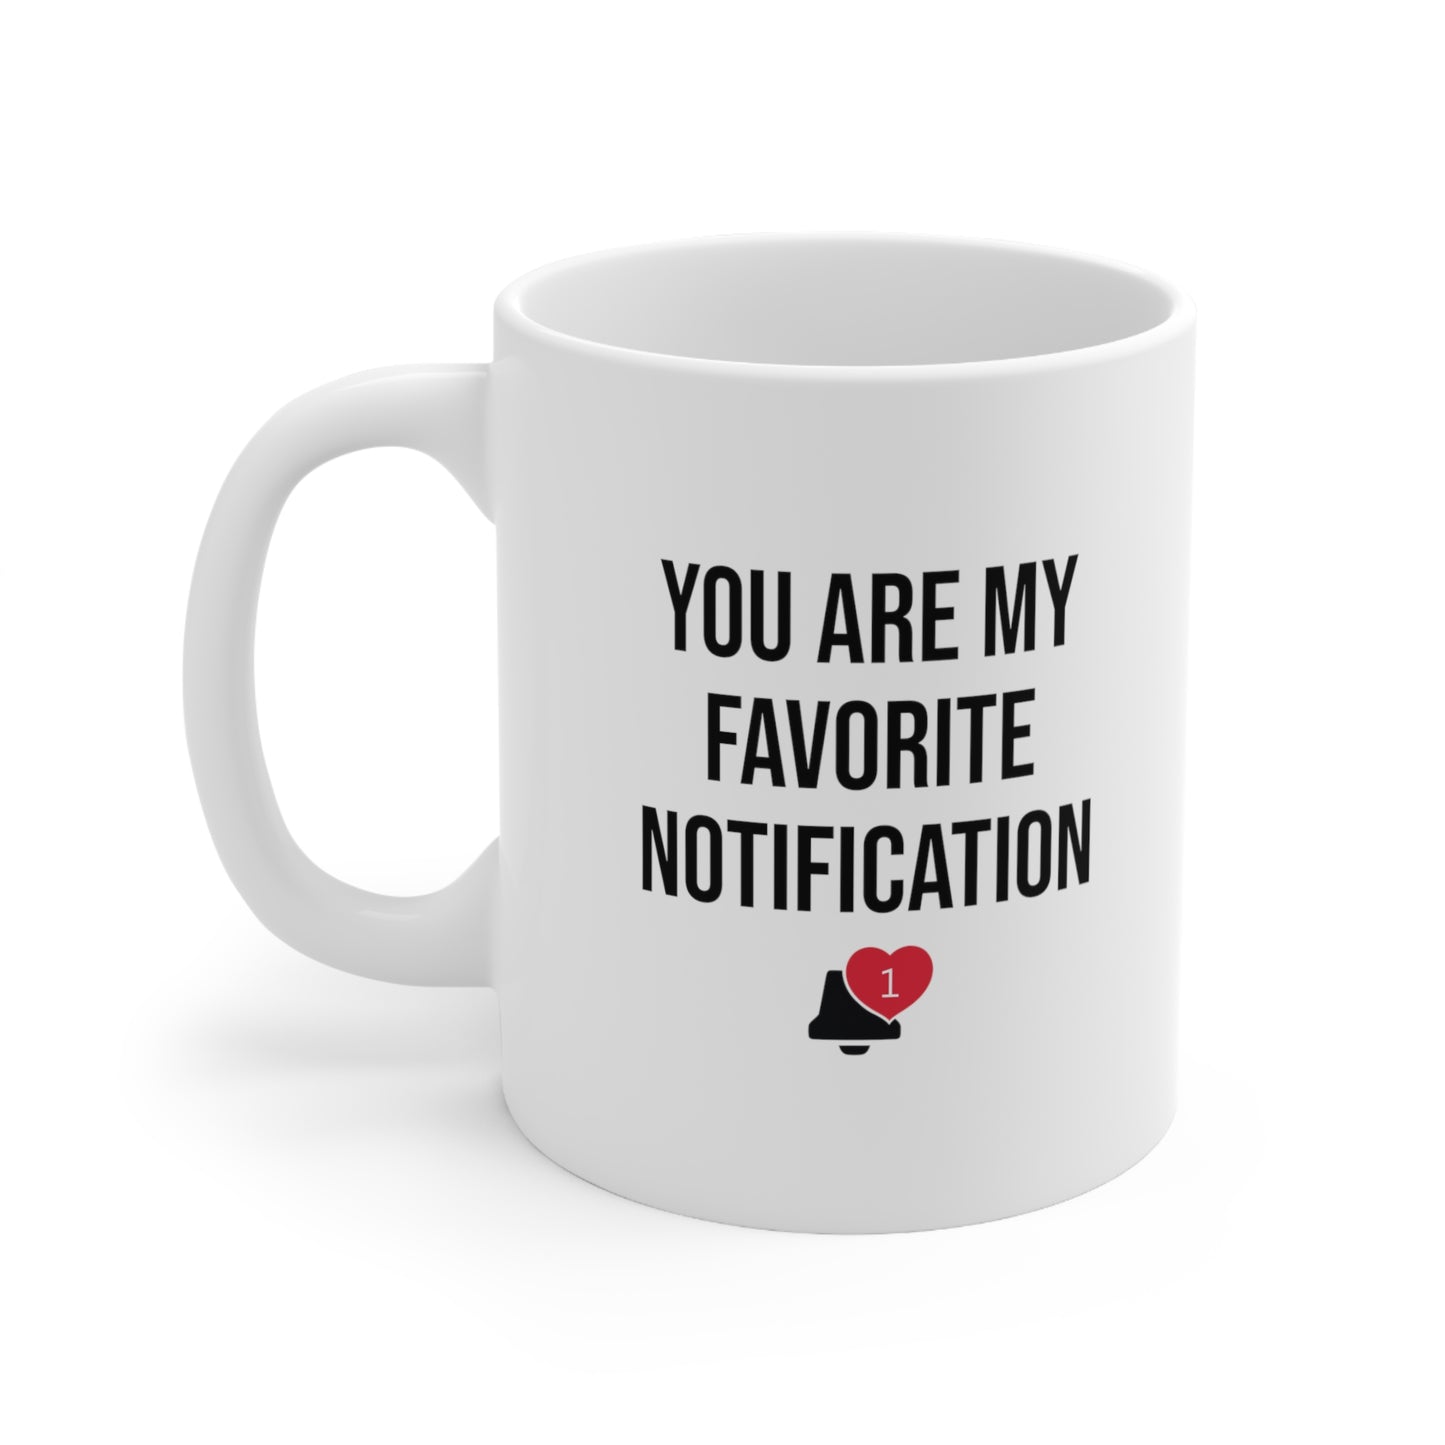 You are my favorite notification Coffee Mug